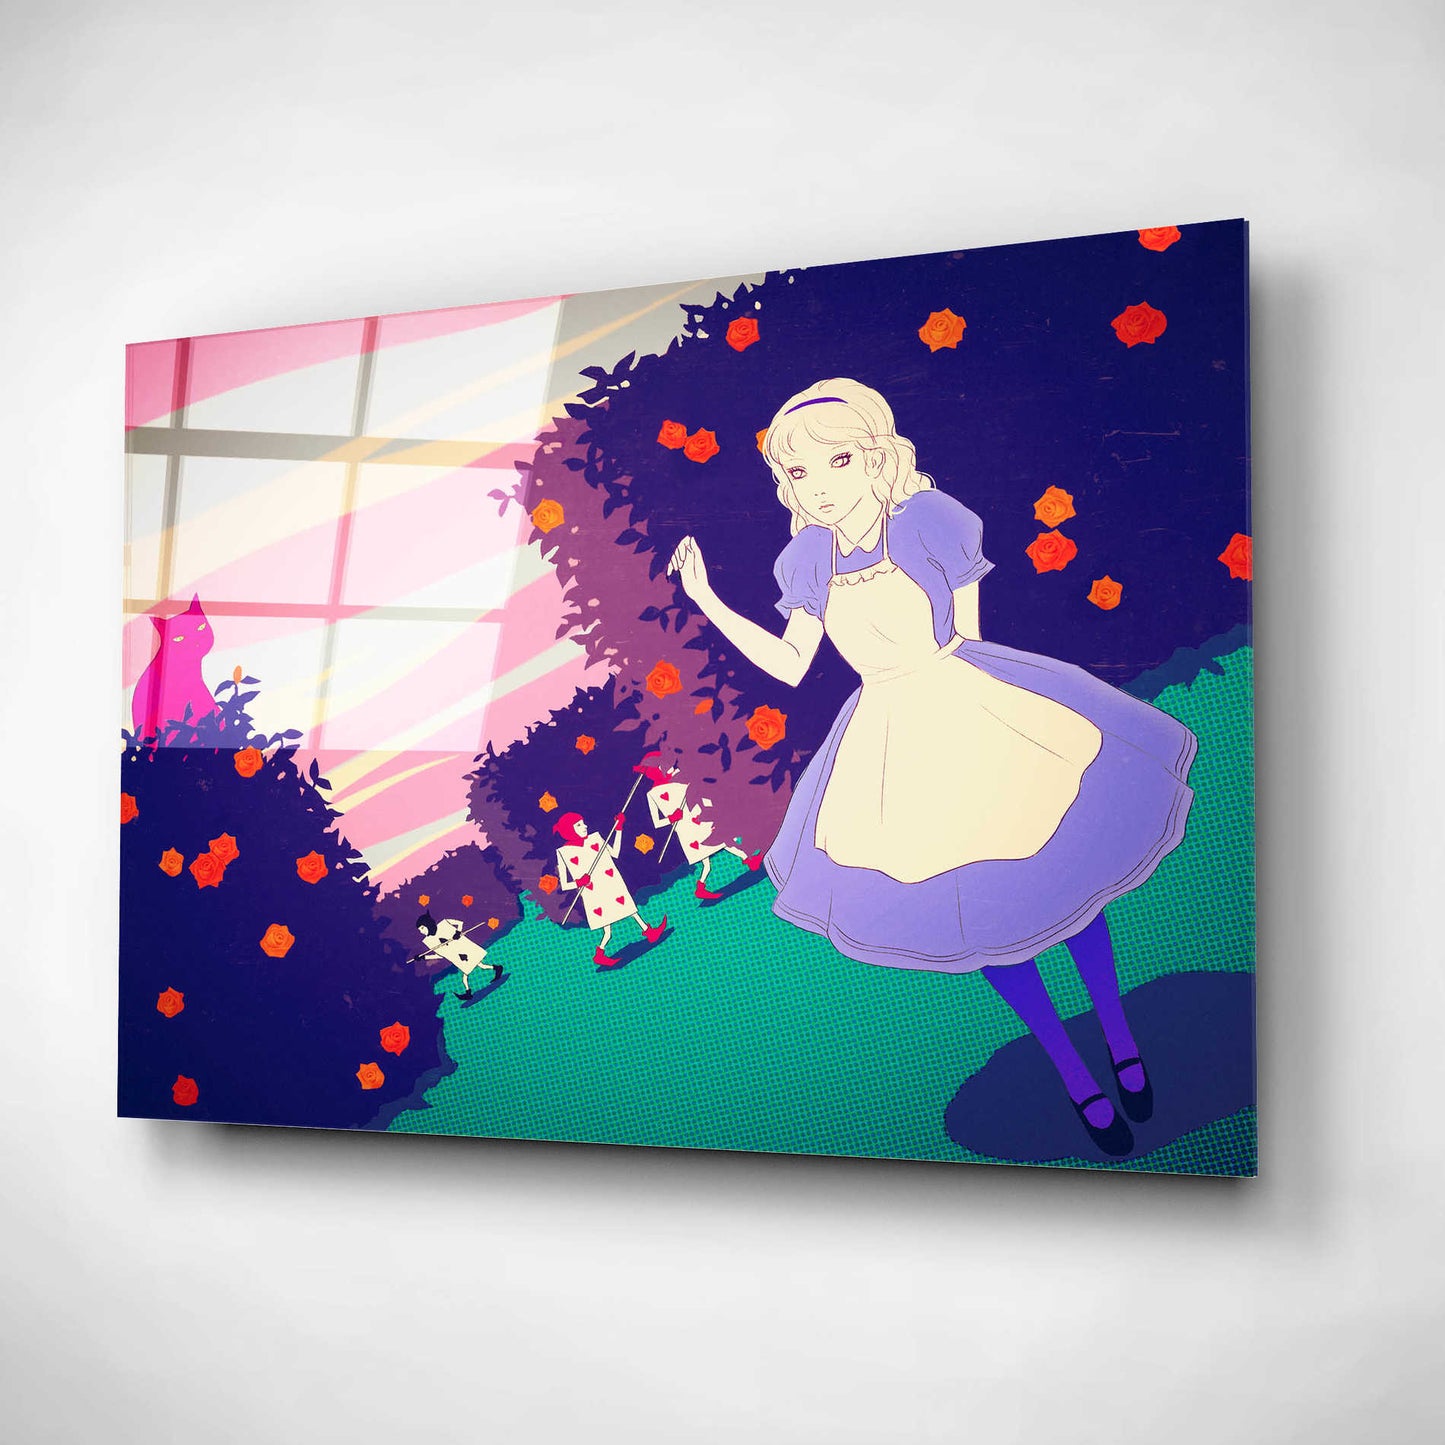 Epic Art 'Alice in Rose Garden' by Sai Tamiya, Acrylic Glass Wall Art,24x16